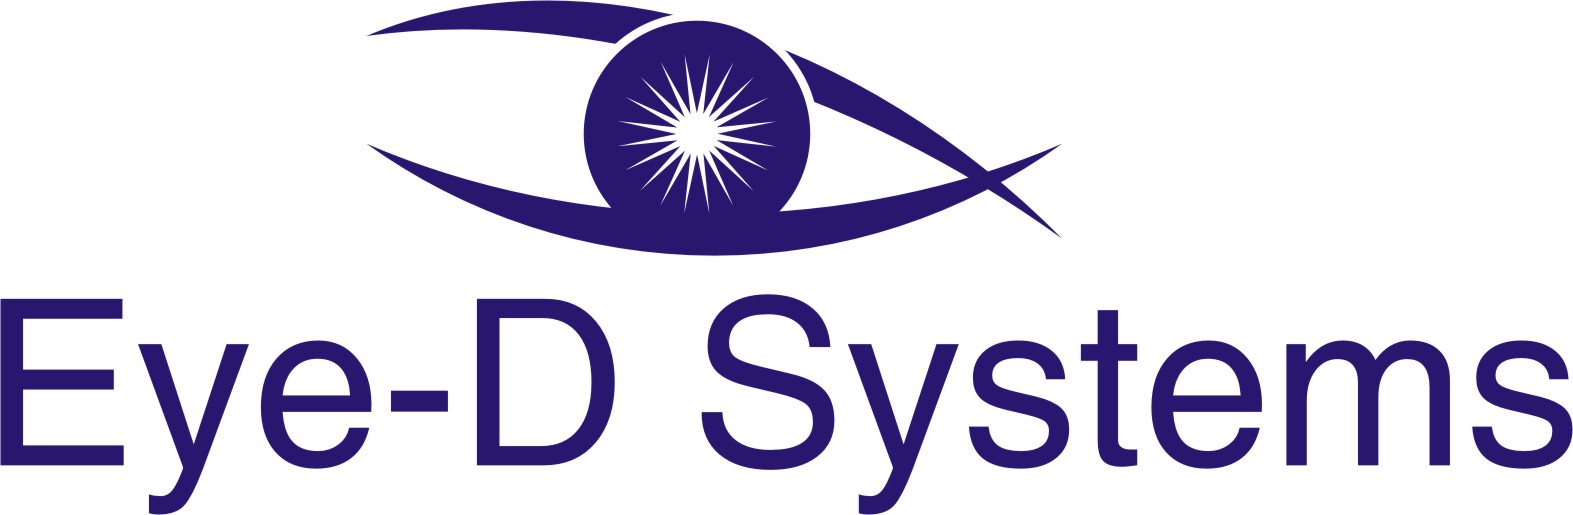 Eye-d Systems (pty) Ltd logo